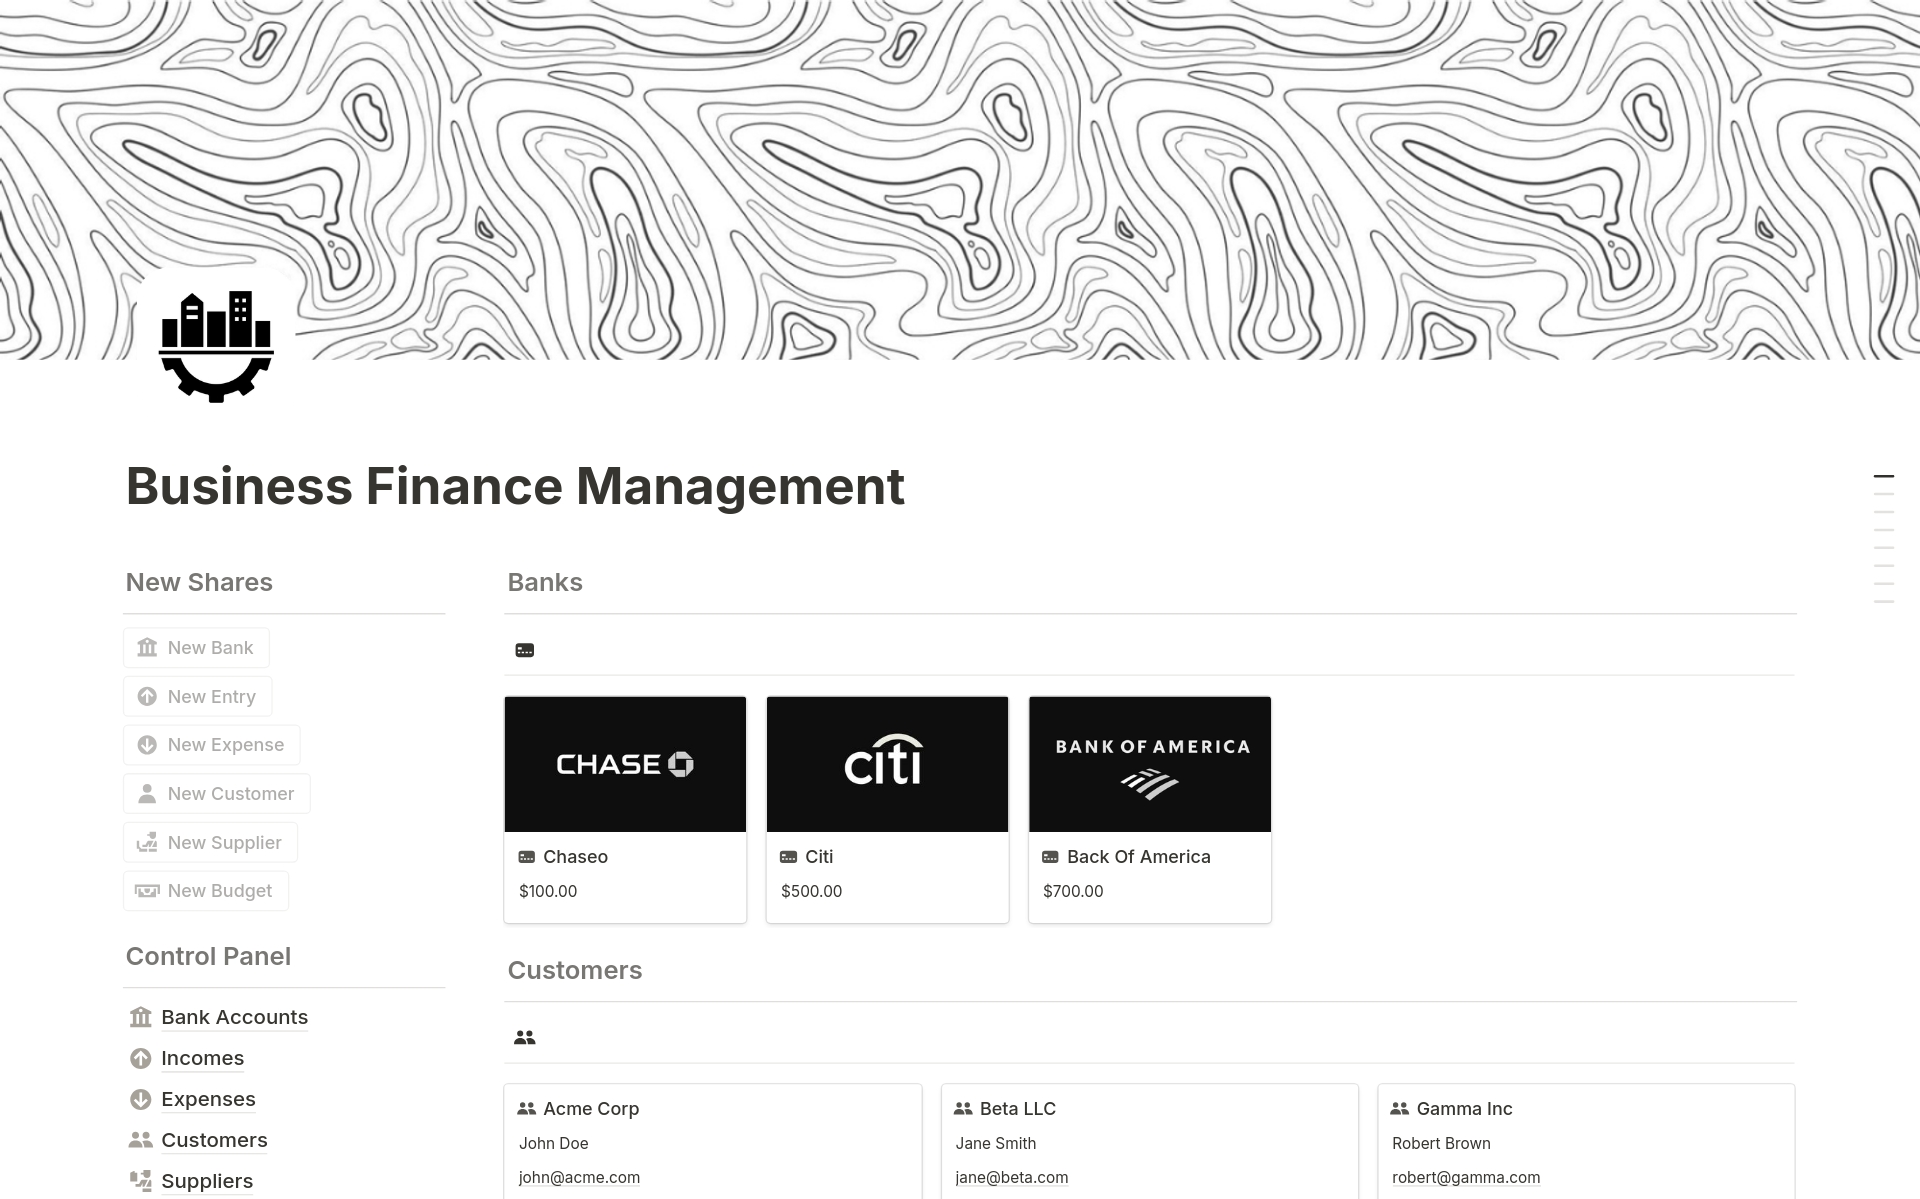 Vista previa de plantilla para Business Finance Management